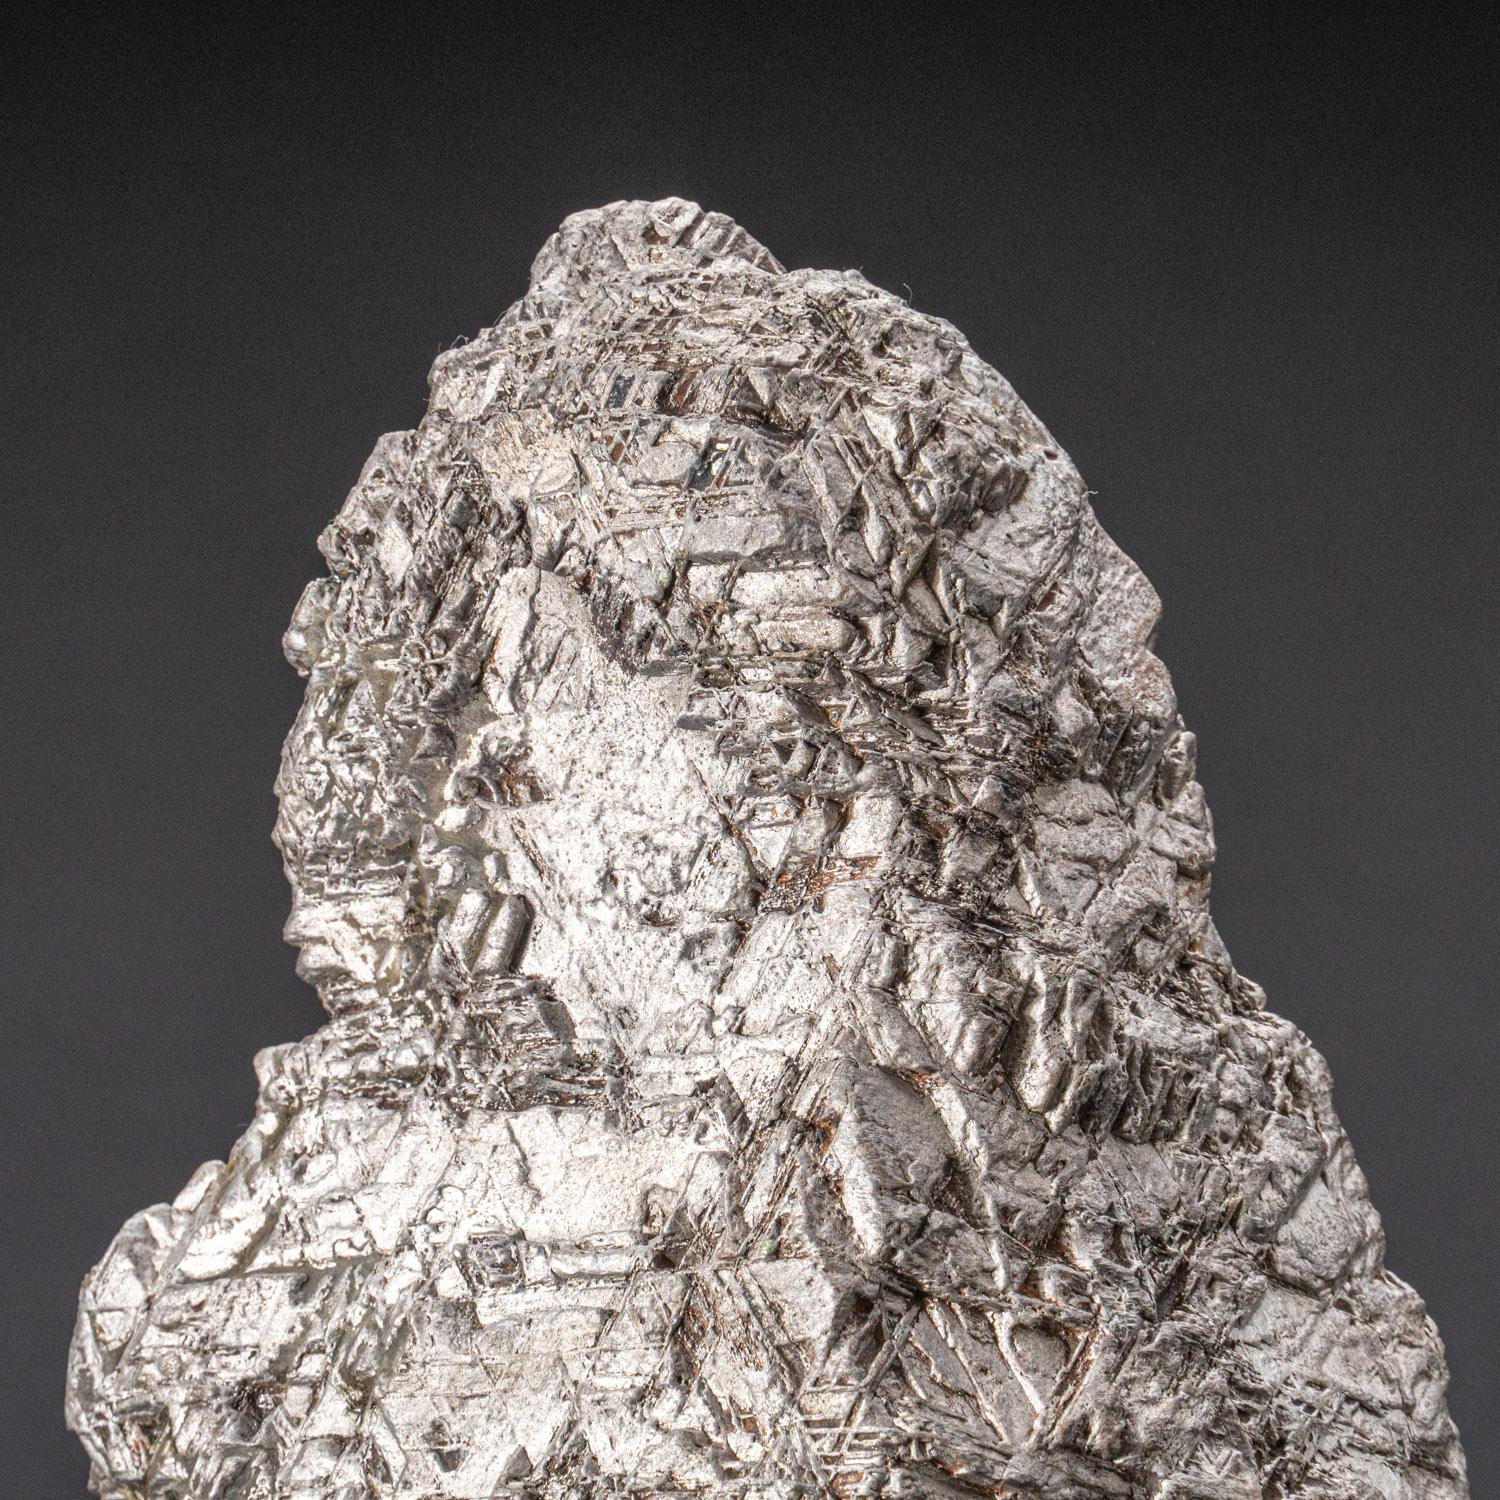 Contemporary Genuine Large Muonionalusta Meteorite Slice (12 lbs) For Sale